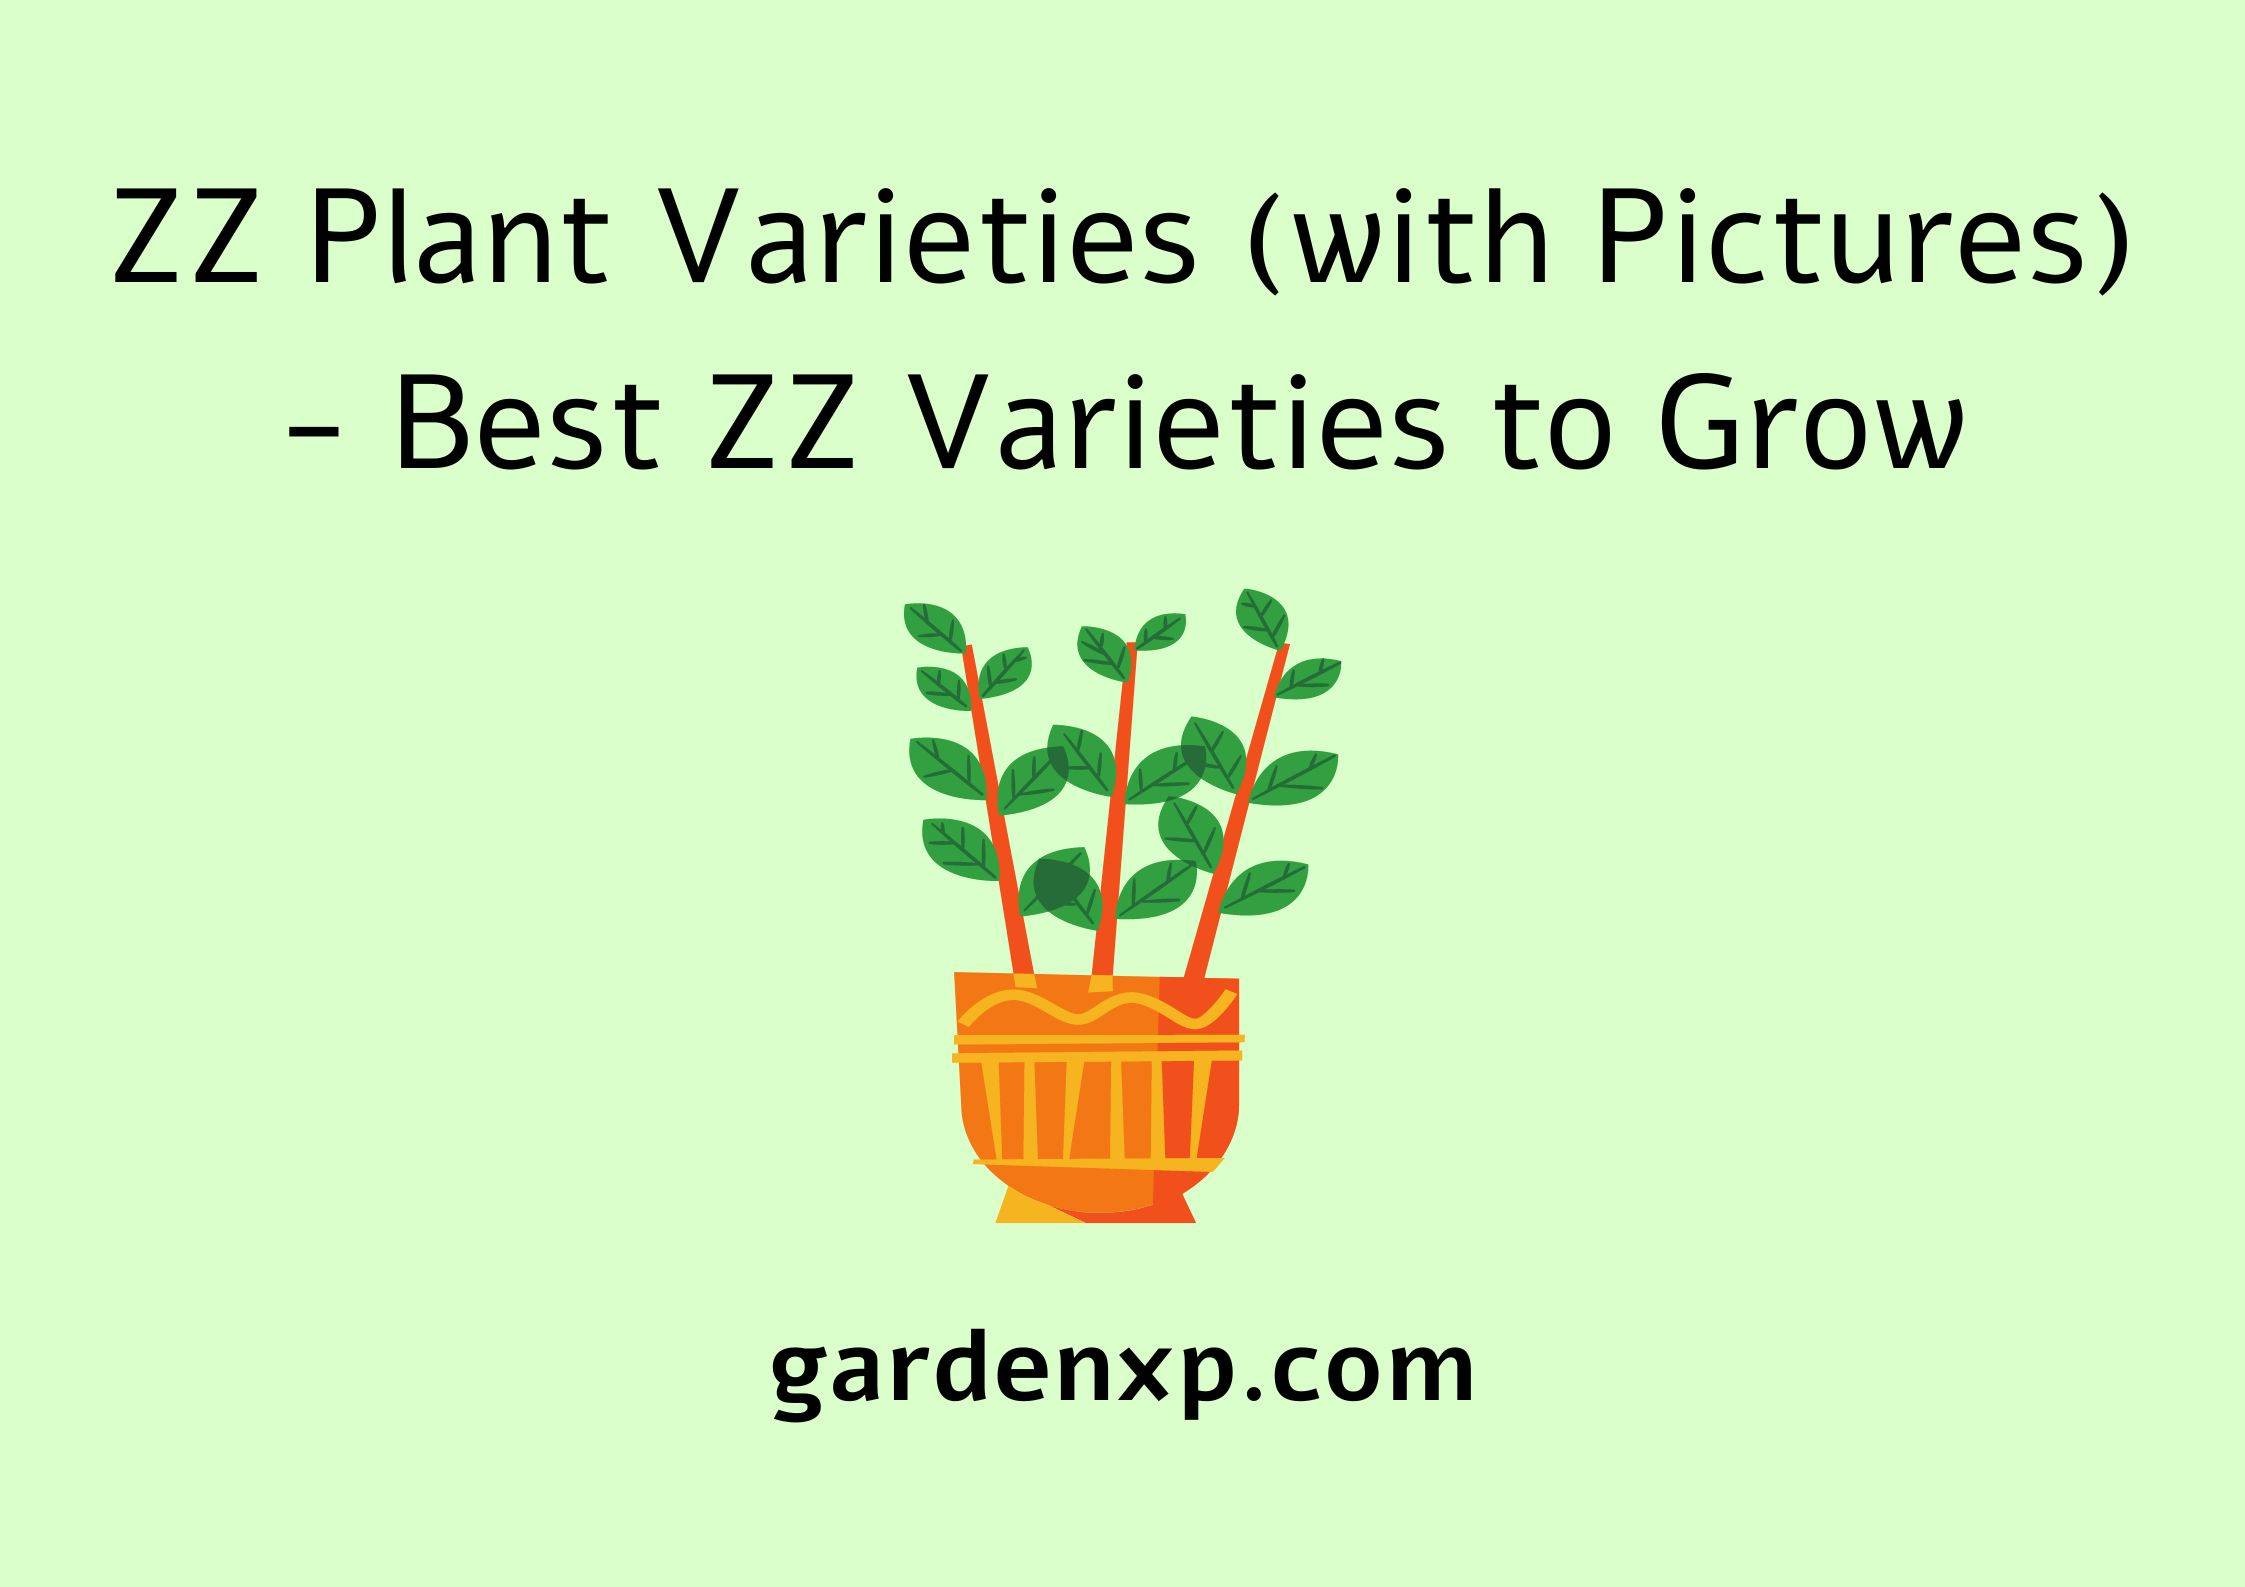 ZZ Plant Varieties (with Pictures) - Best ZZ Varieties to Grow